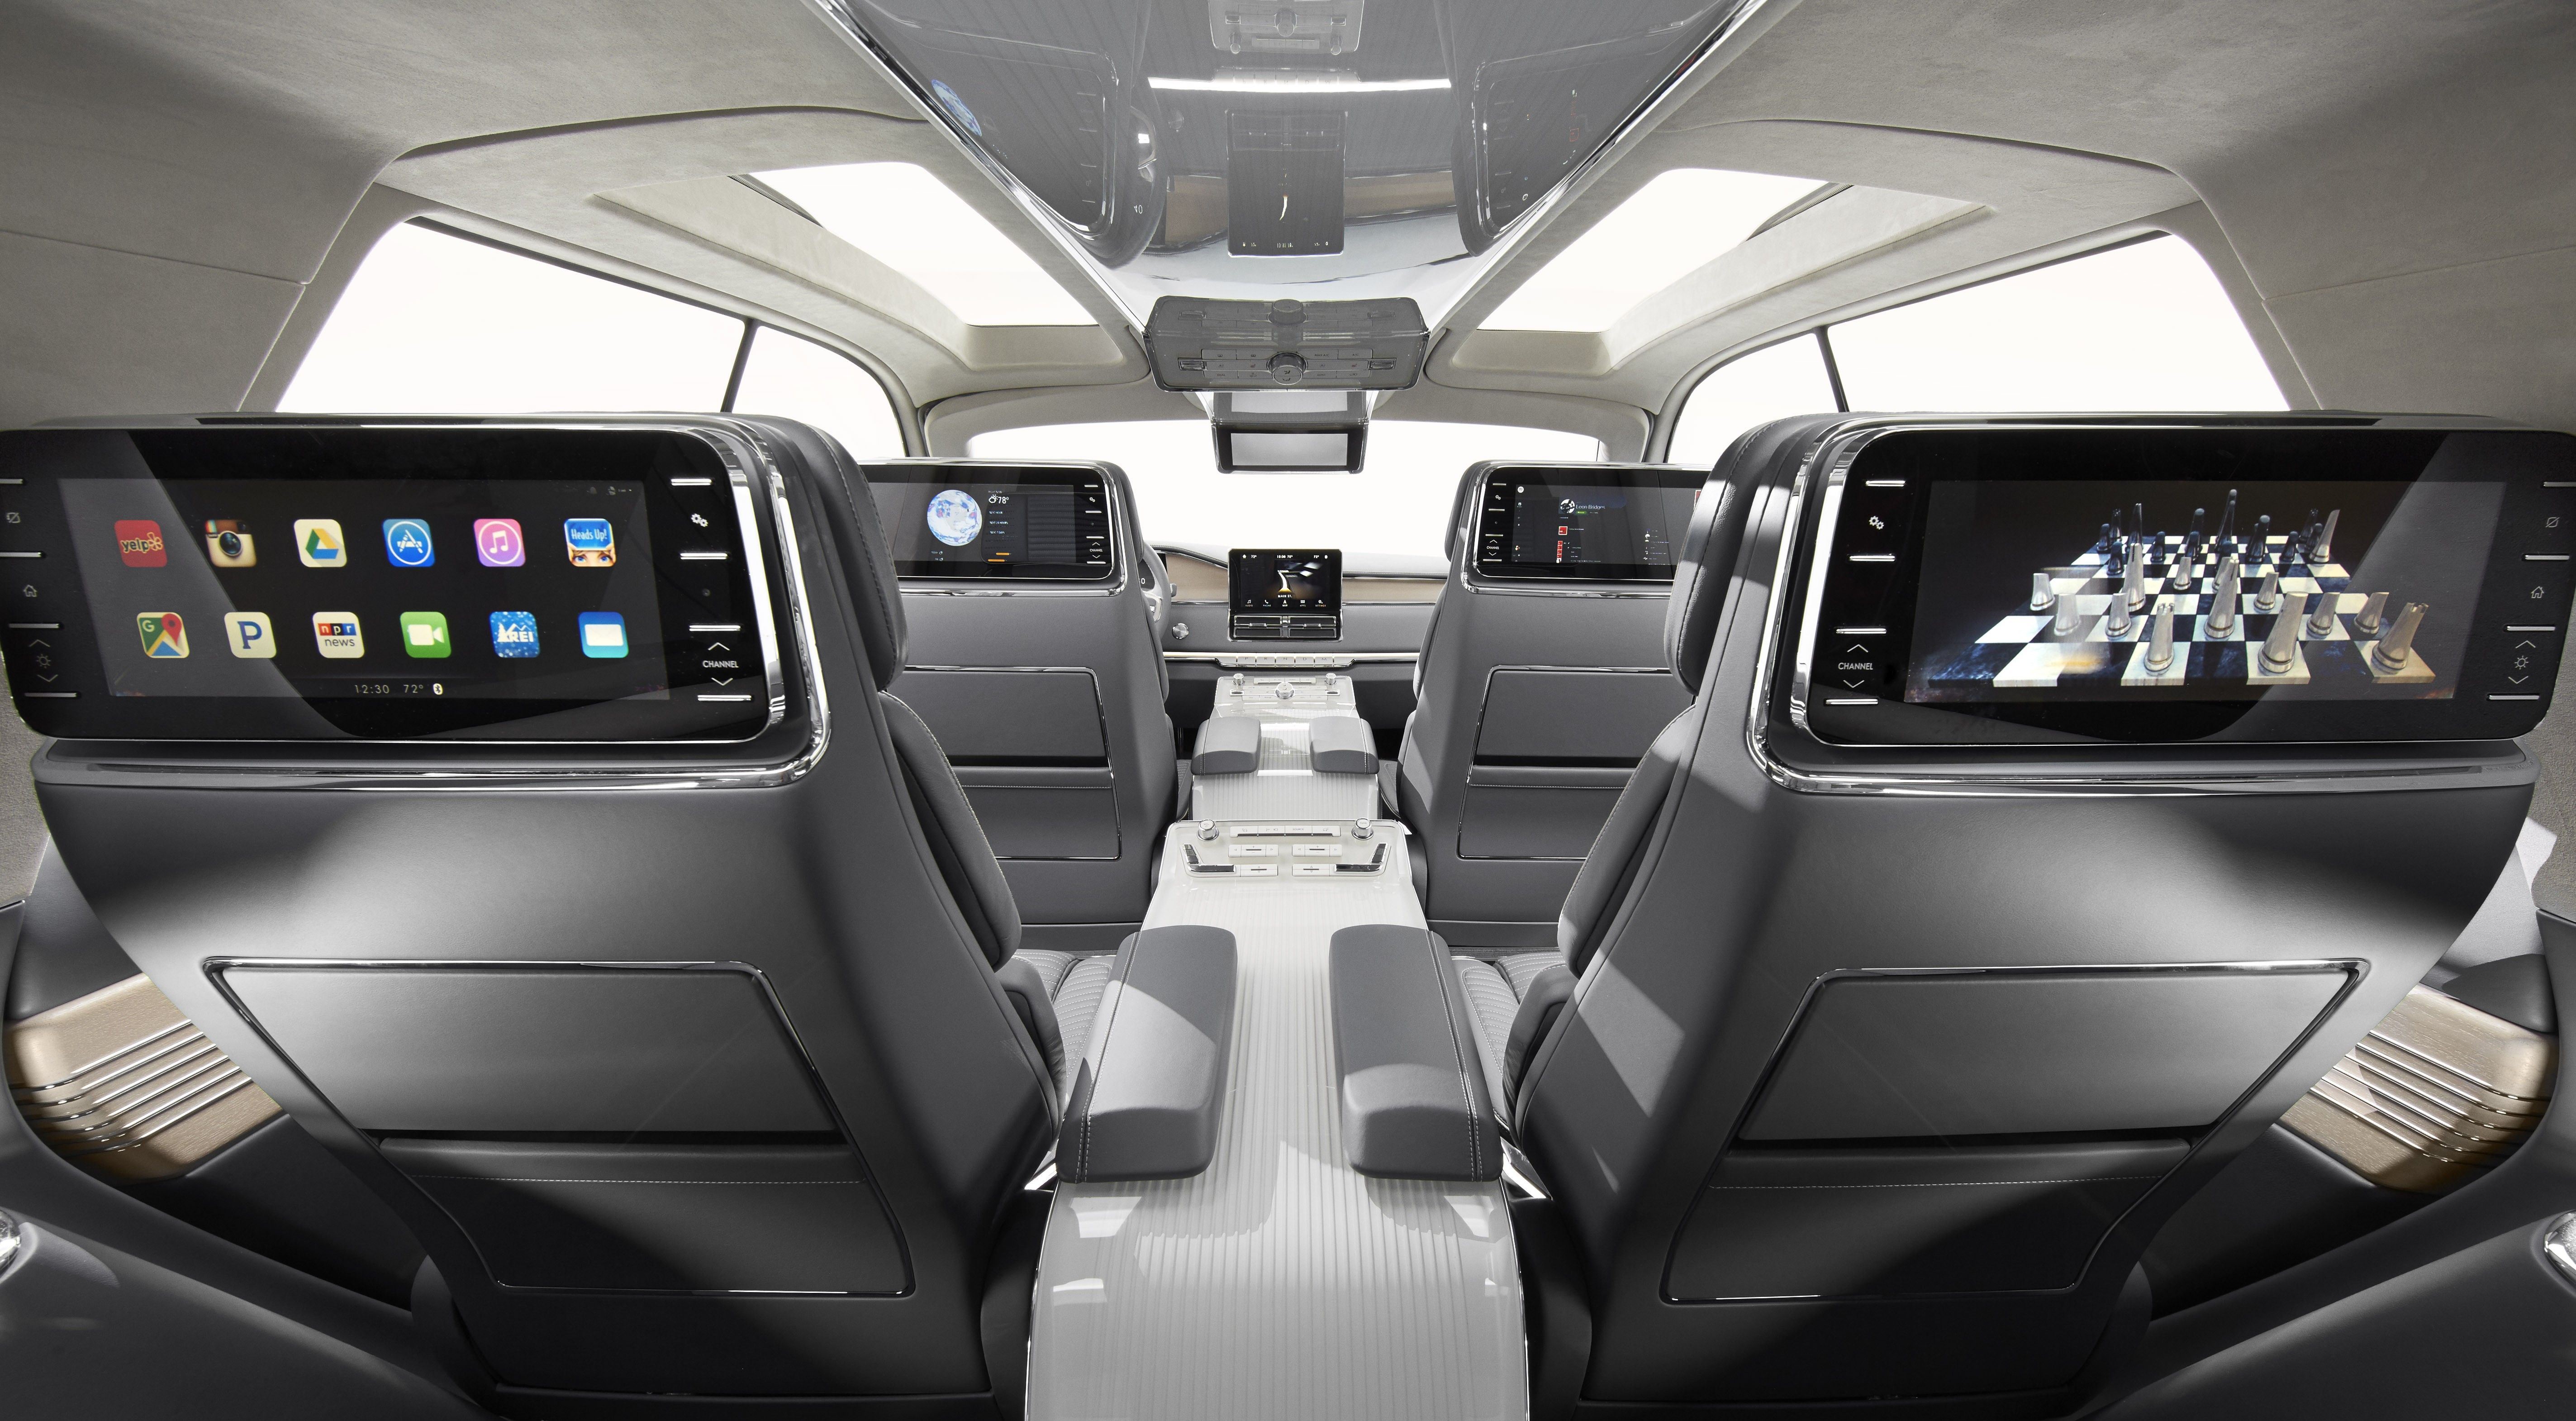 2018 Lincoln Navigator back interior | Car Reviews